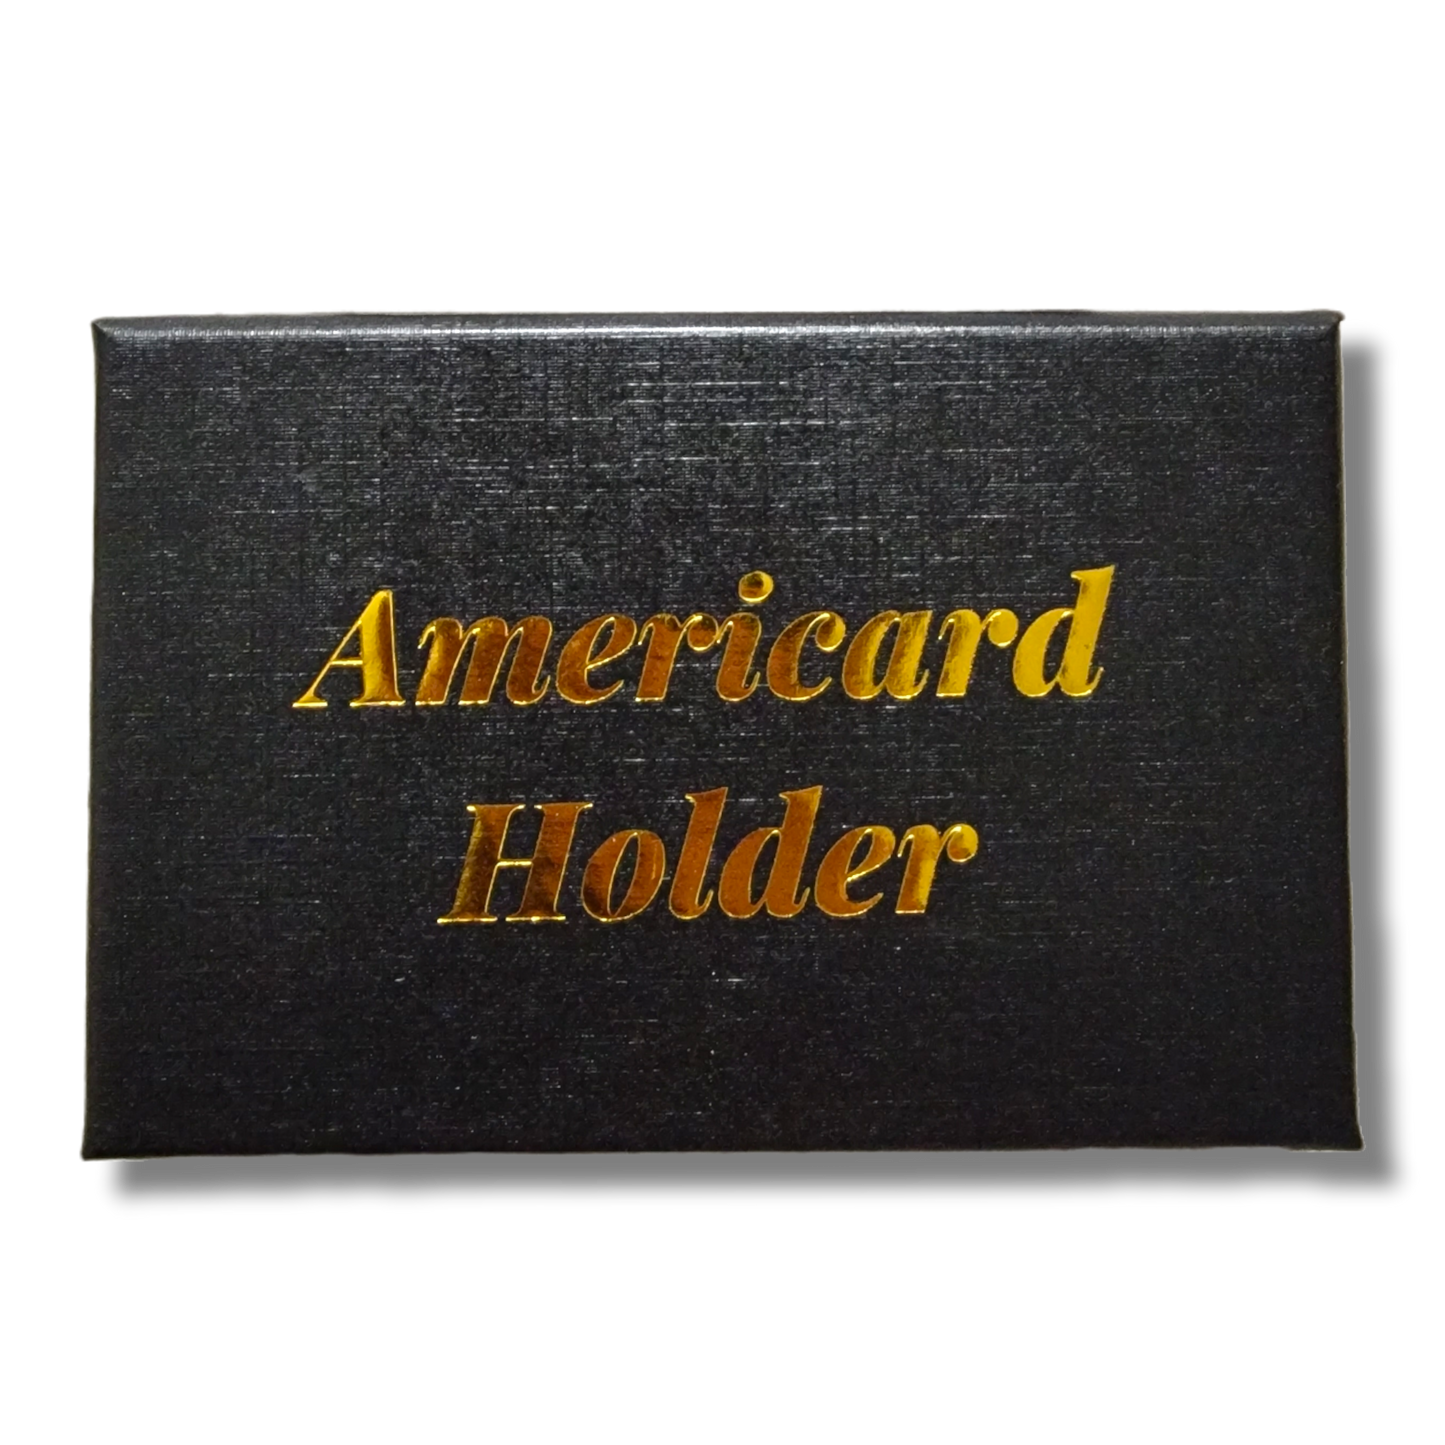 Americard holder -Modern Slim Wallet - Great Gift for Husband, Friends, ladies and gentlemen